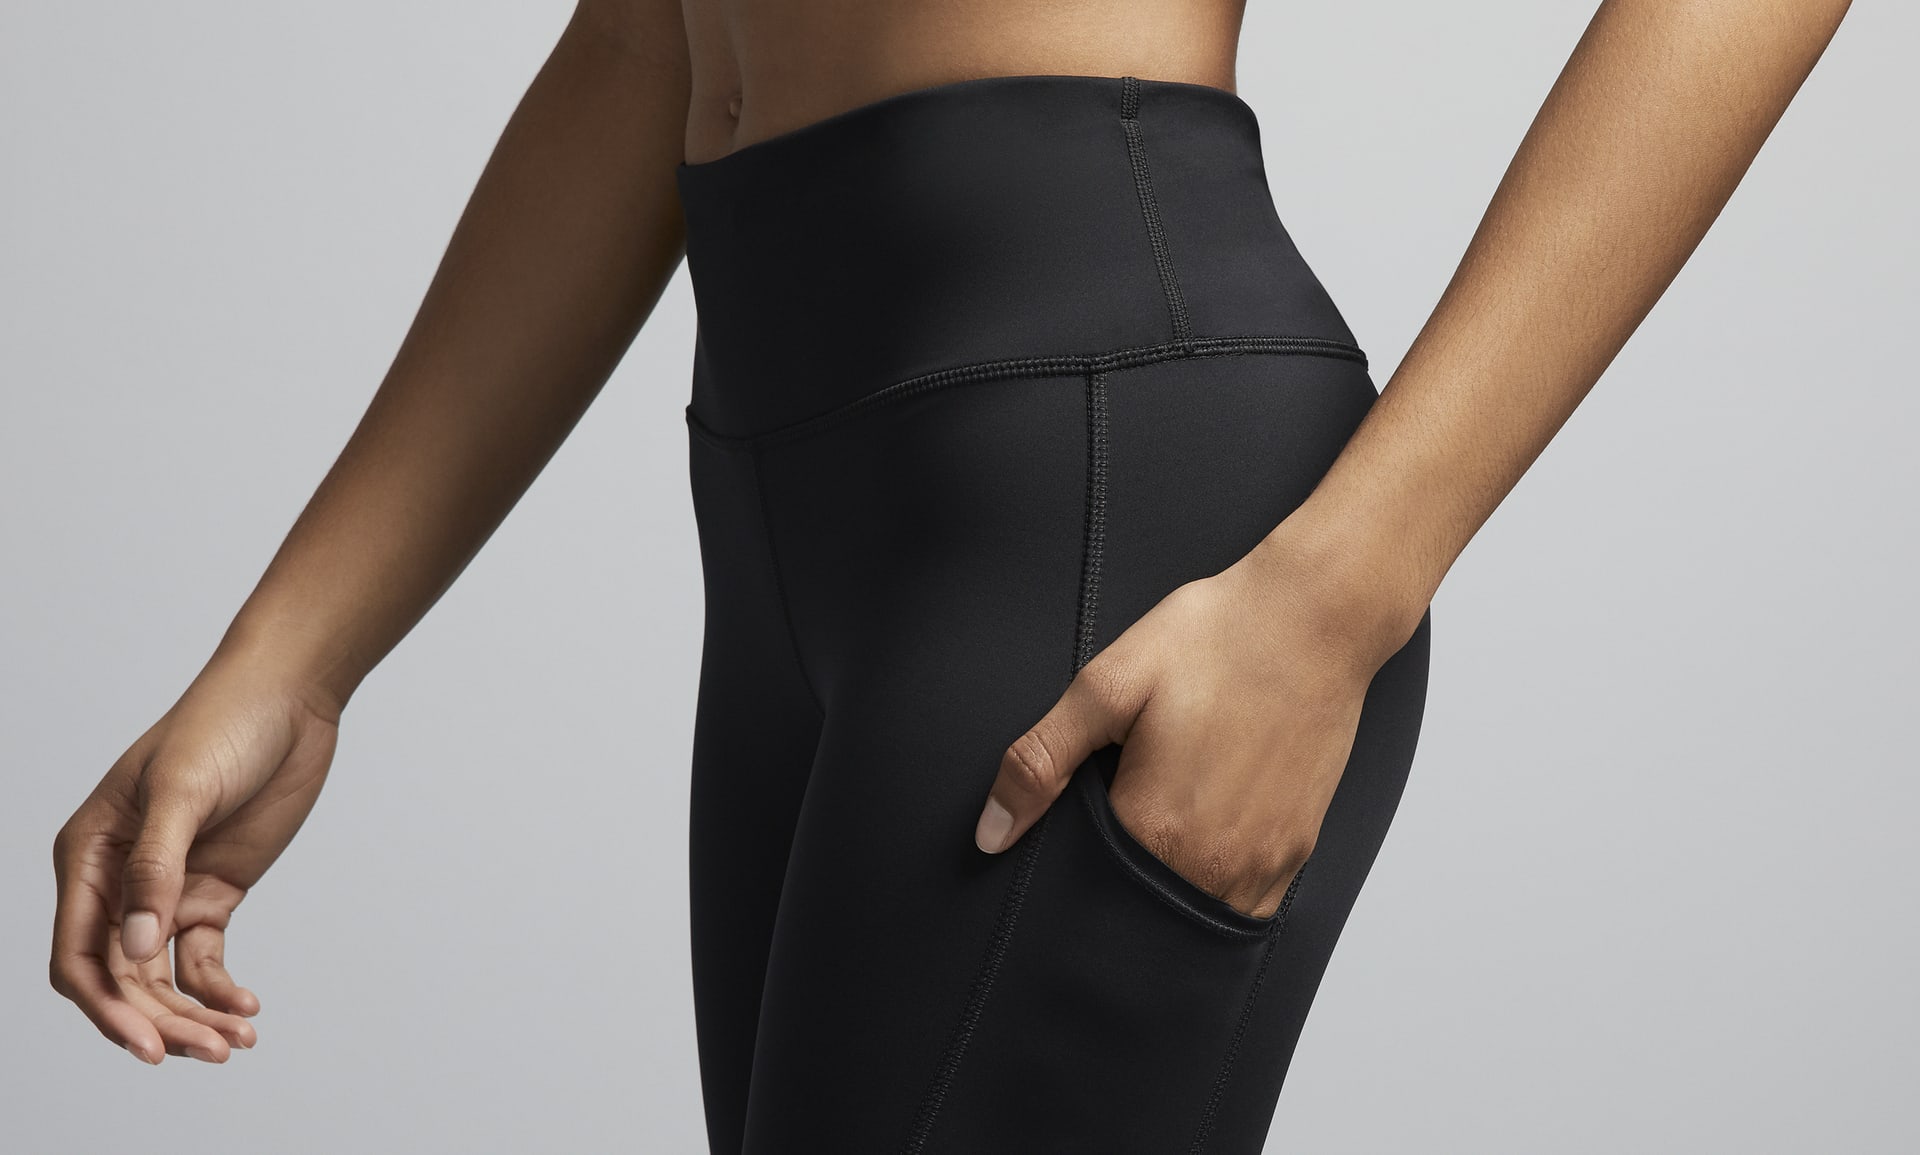 Nike Epic Luxe Women's Mid-Rise Pocket Running Leggings (Plus Size).